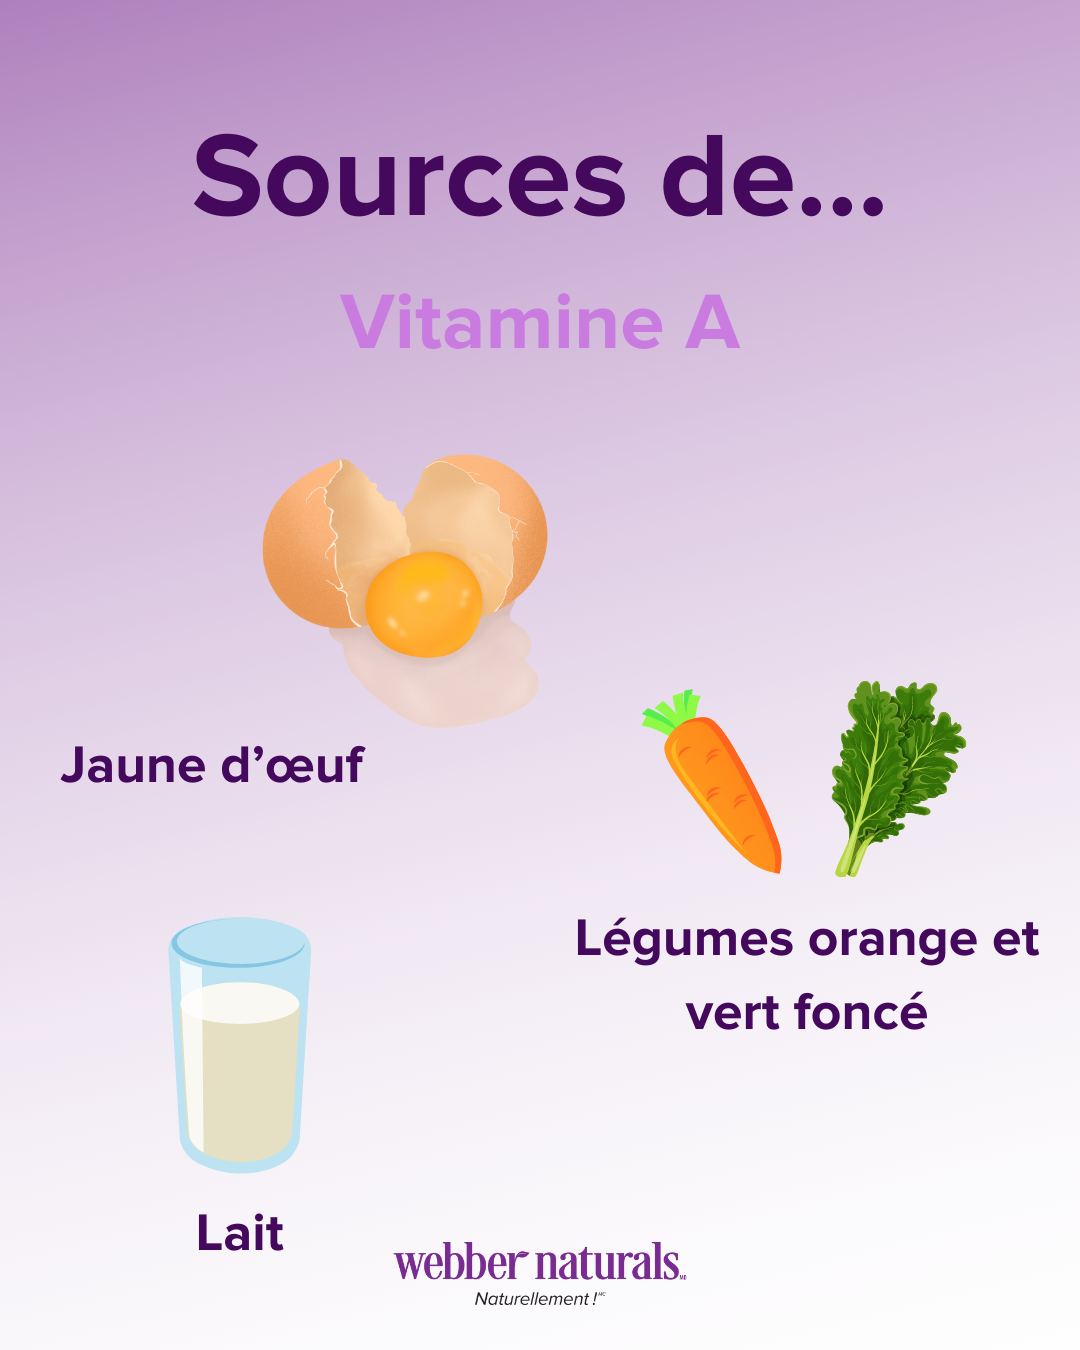 Sources de Vitamine A